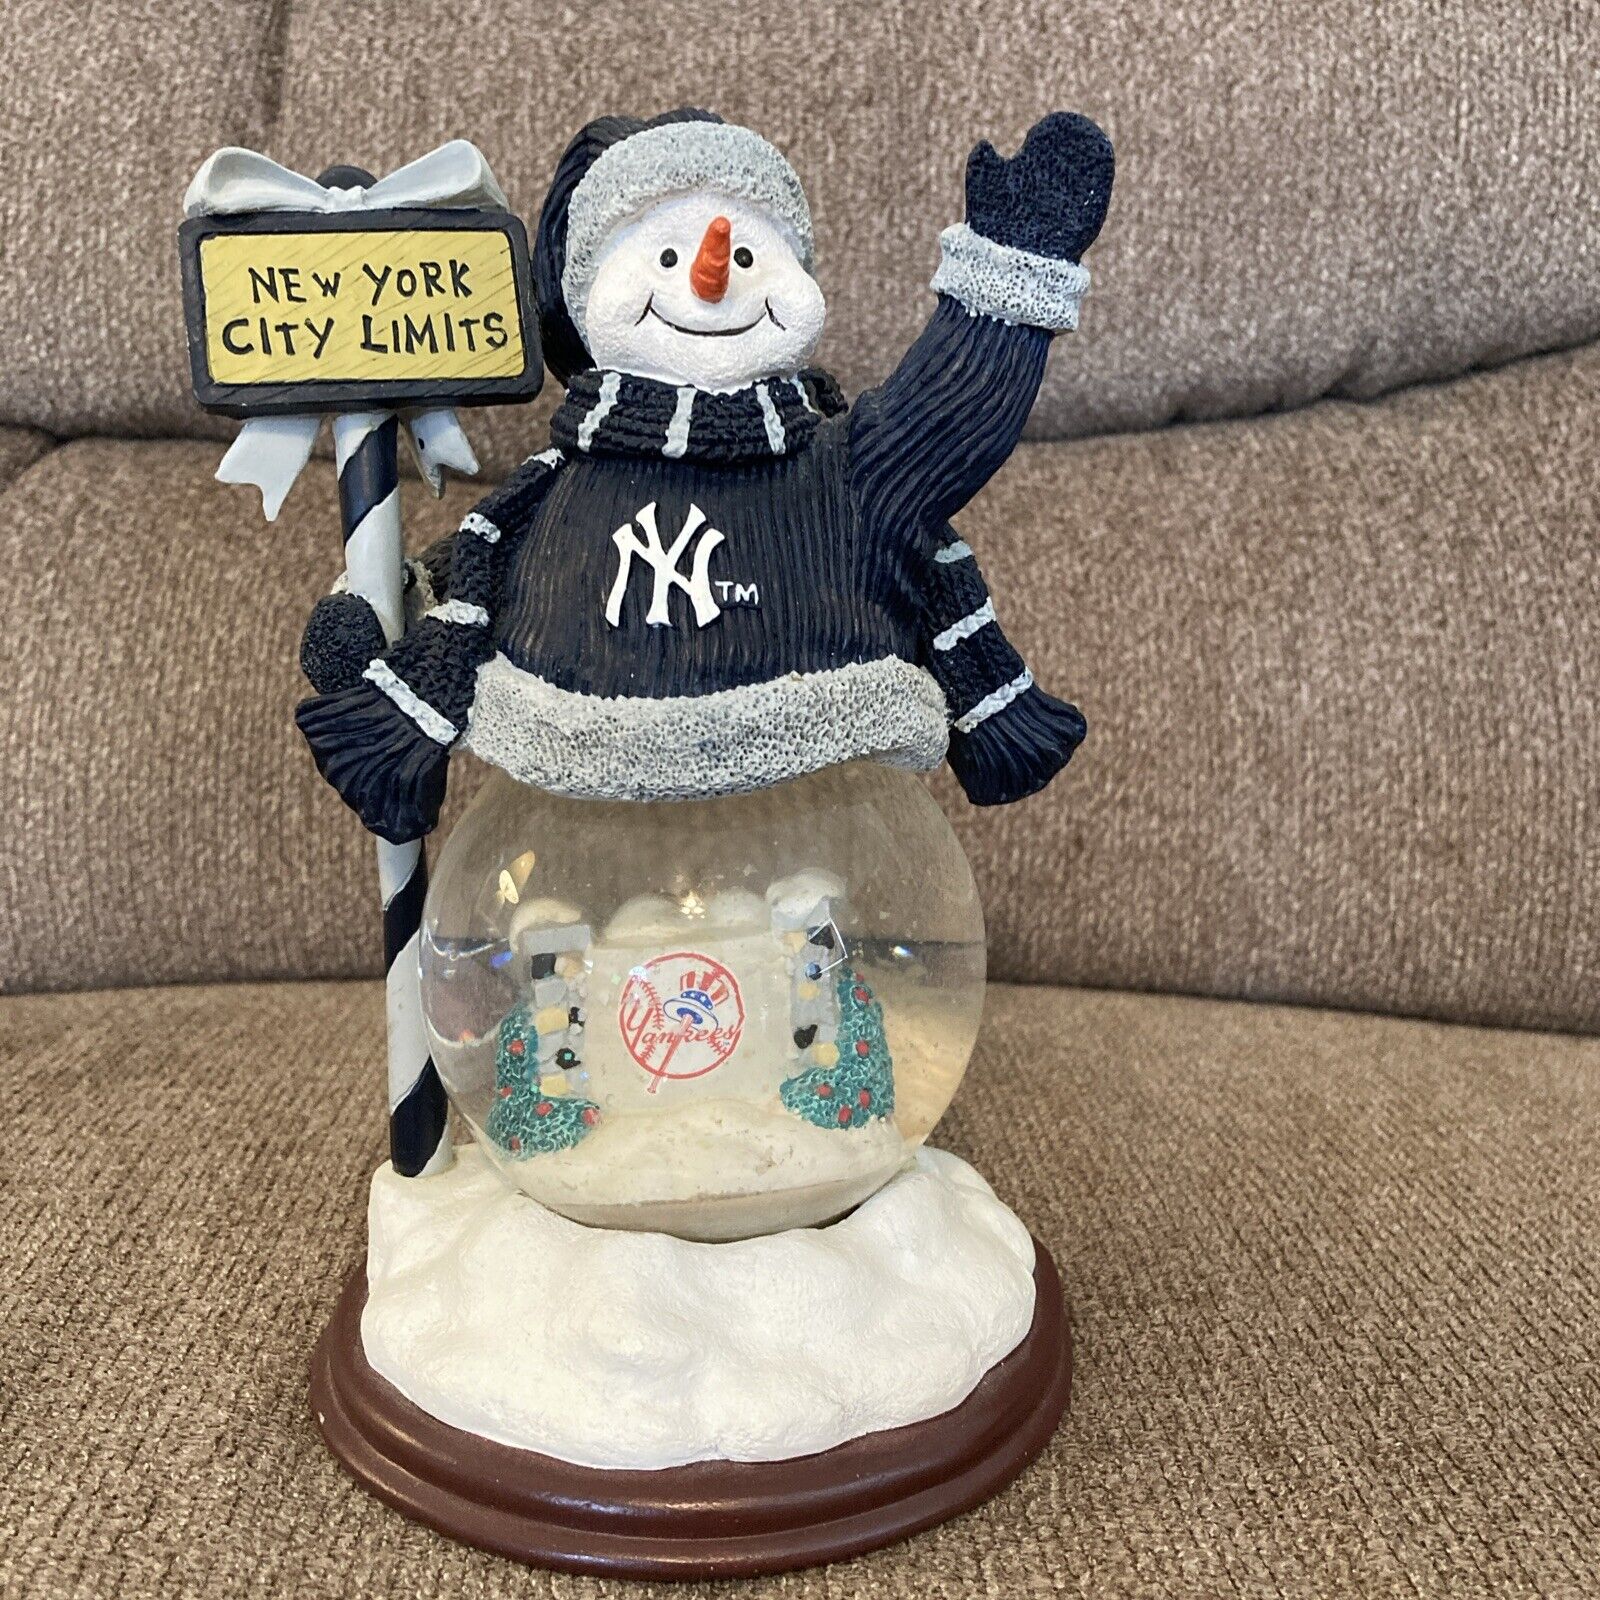 2007 Memory Company New York Yankees City Limits Snowman Snow Globe Limited Ed